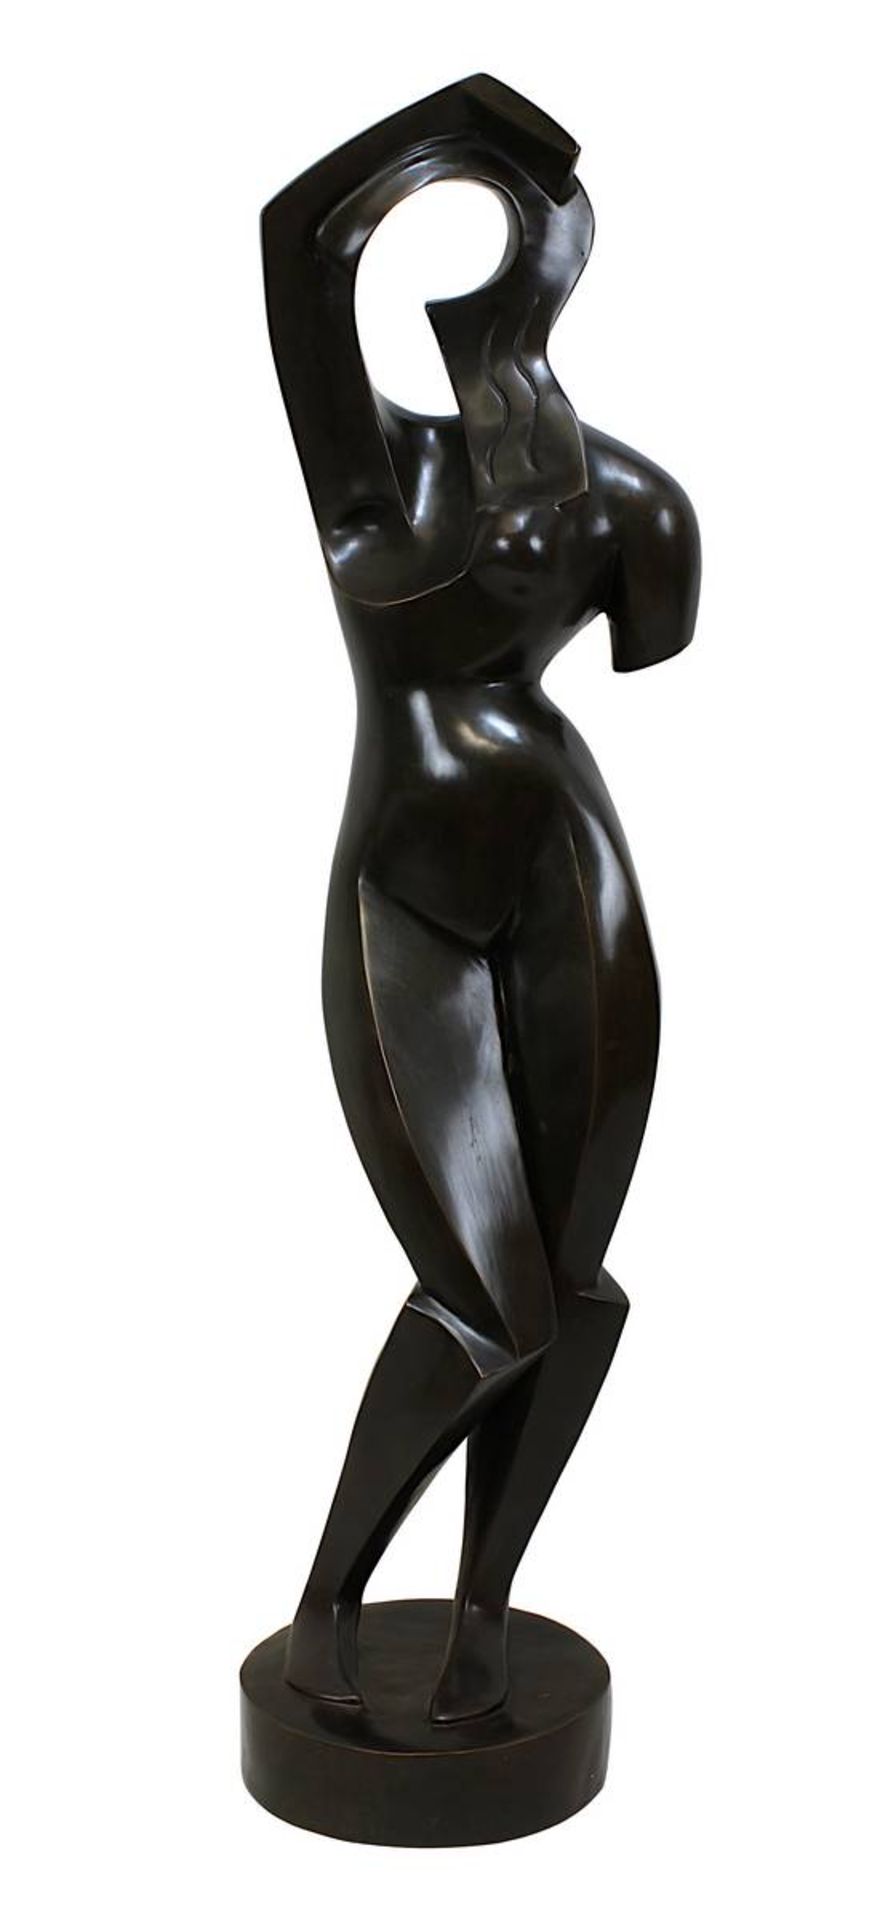 Archipenko, Alexander (Kiew 1887 - 1964 New York), Nachguss/Replik (recast) der Figur "Women combing